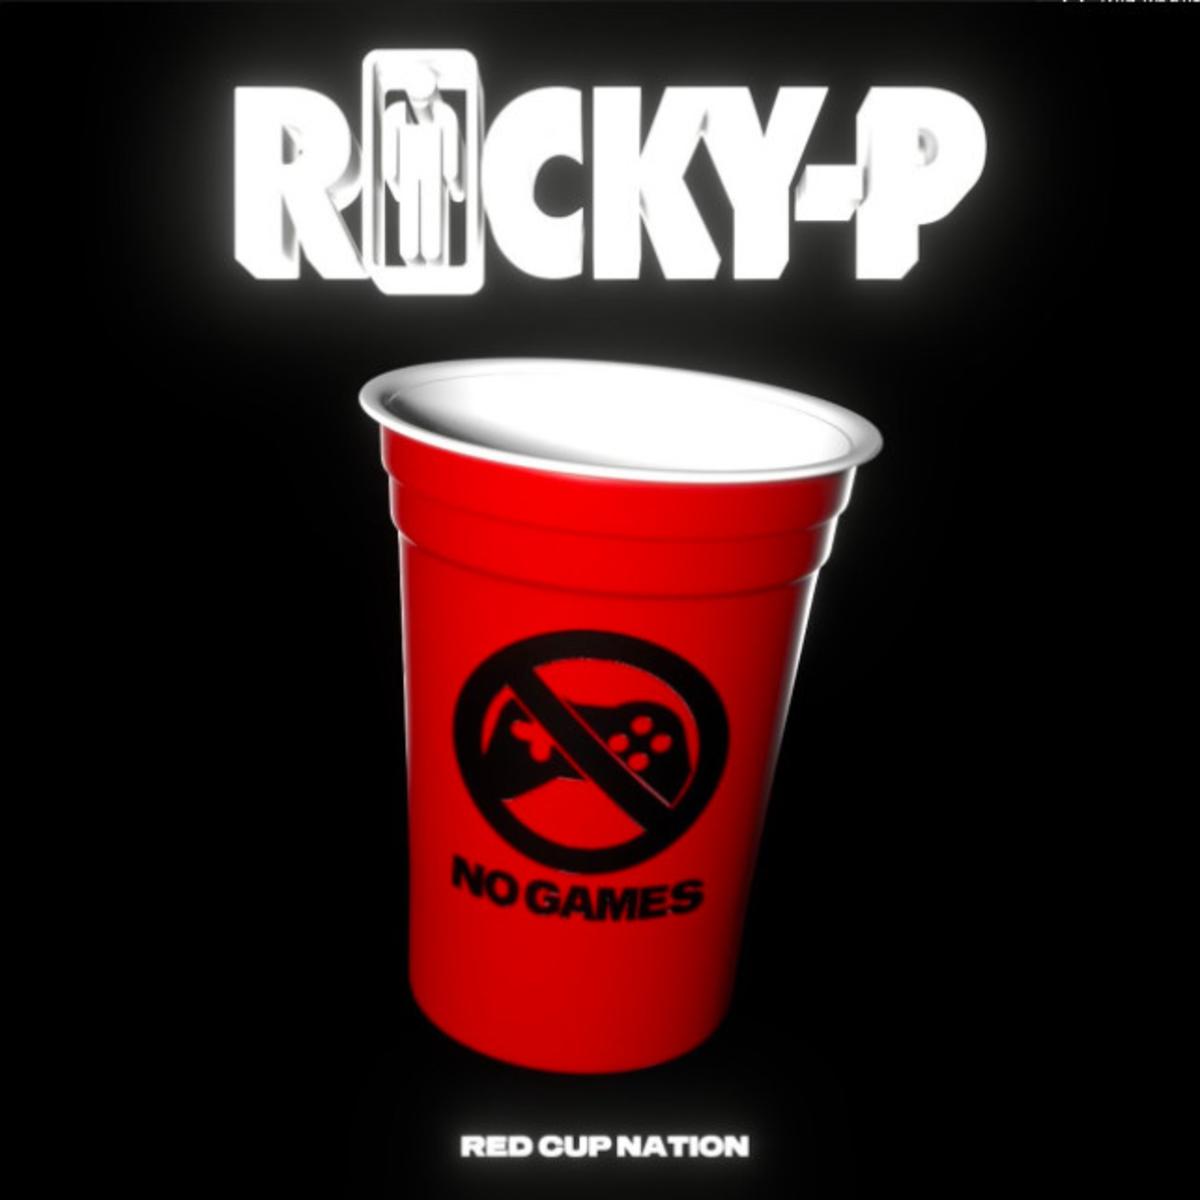 Ricky P Calls On Wiz Khalifa & Tory Lanez For “No Games”